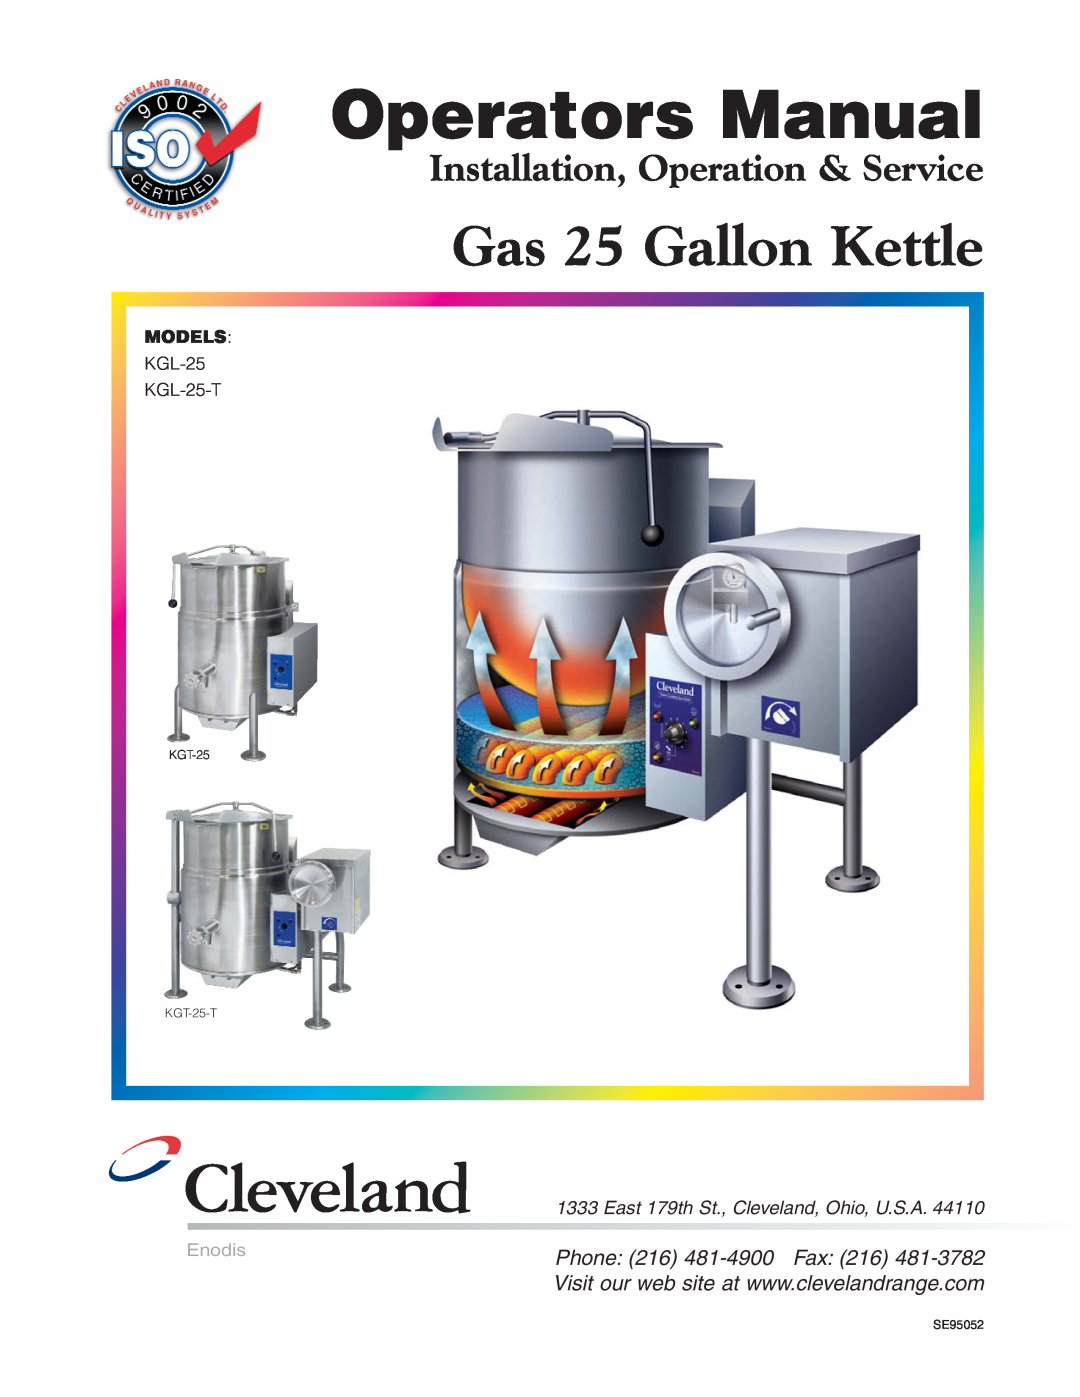 Cleveland Range KGT-25-T, KGL-25 manual Operators Manual, Gas 25 Gallon Kettle, Installation, Operation & Service, Enodis 